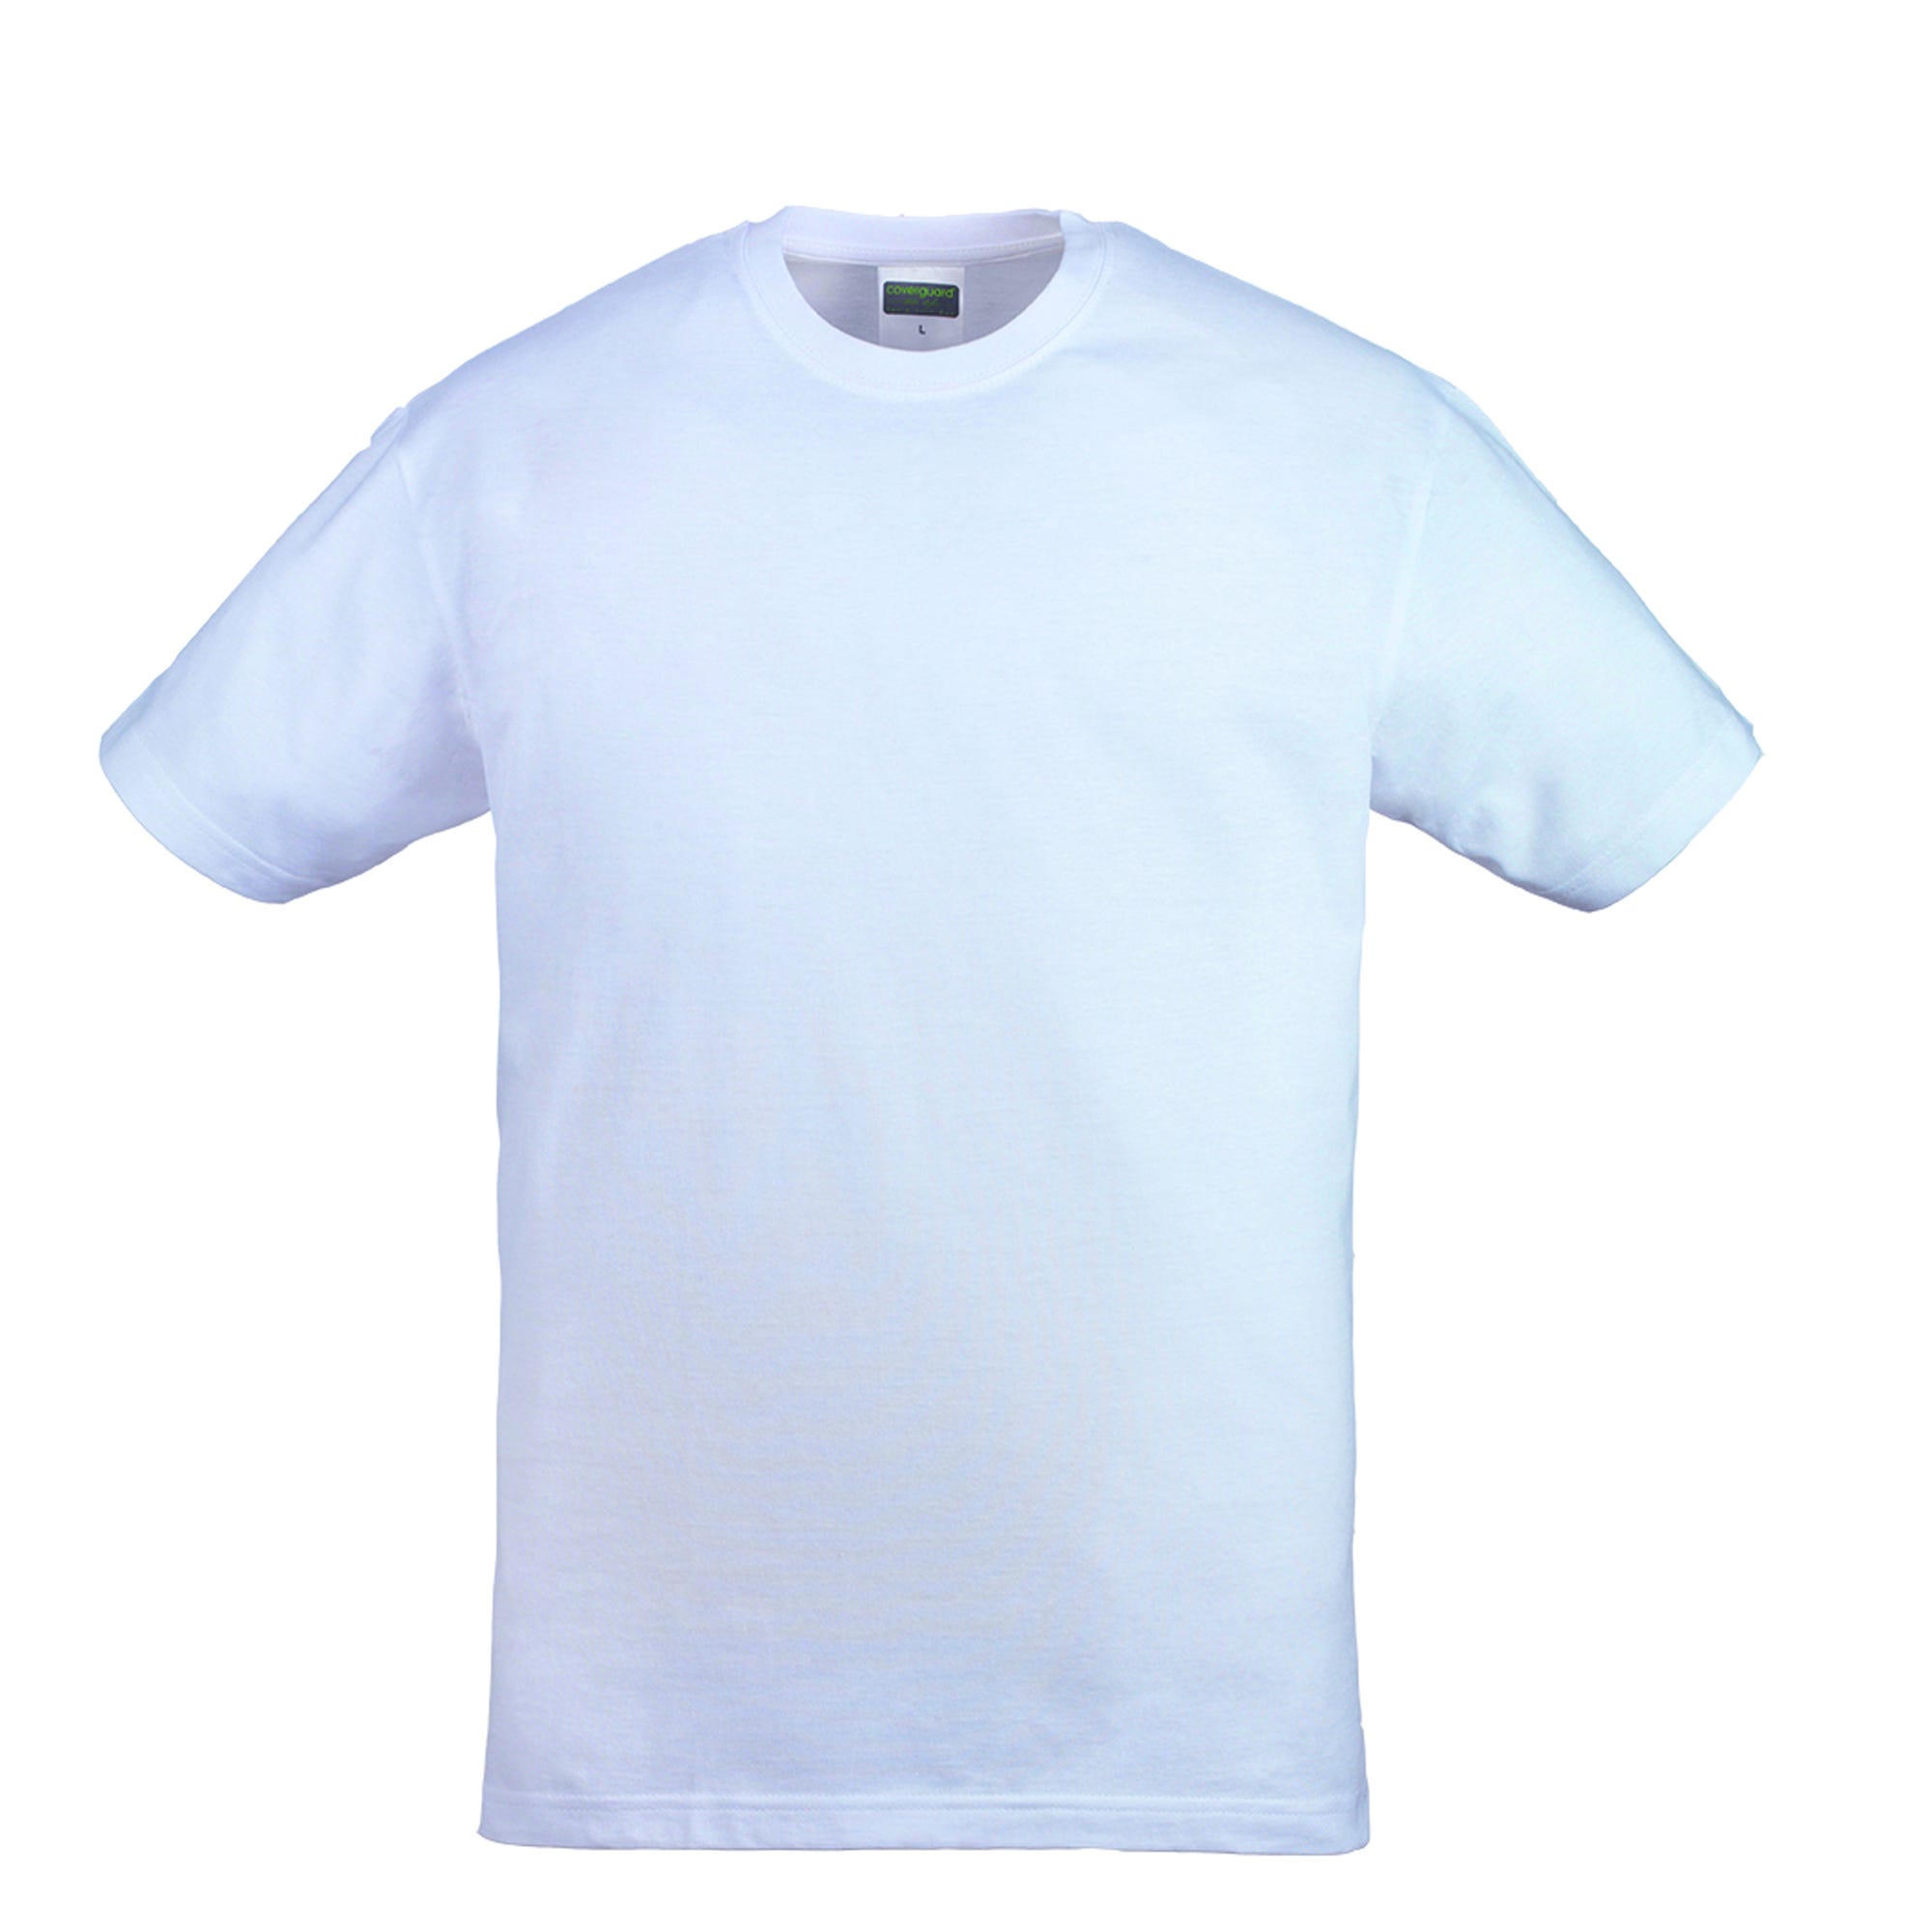 HIKE T-shirt MC blanc, 100% coton, 190g/m² - COVERGUARD - Taille 2XL 1